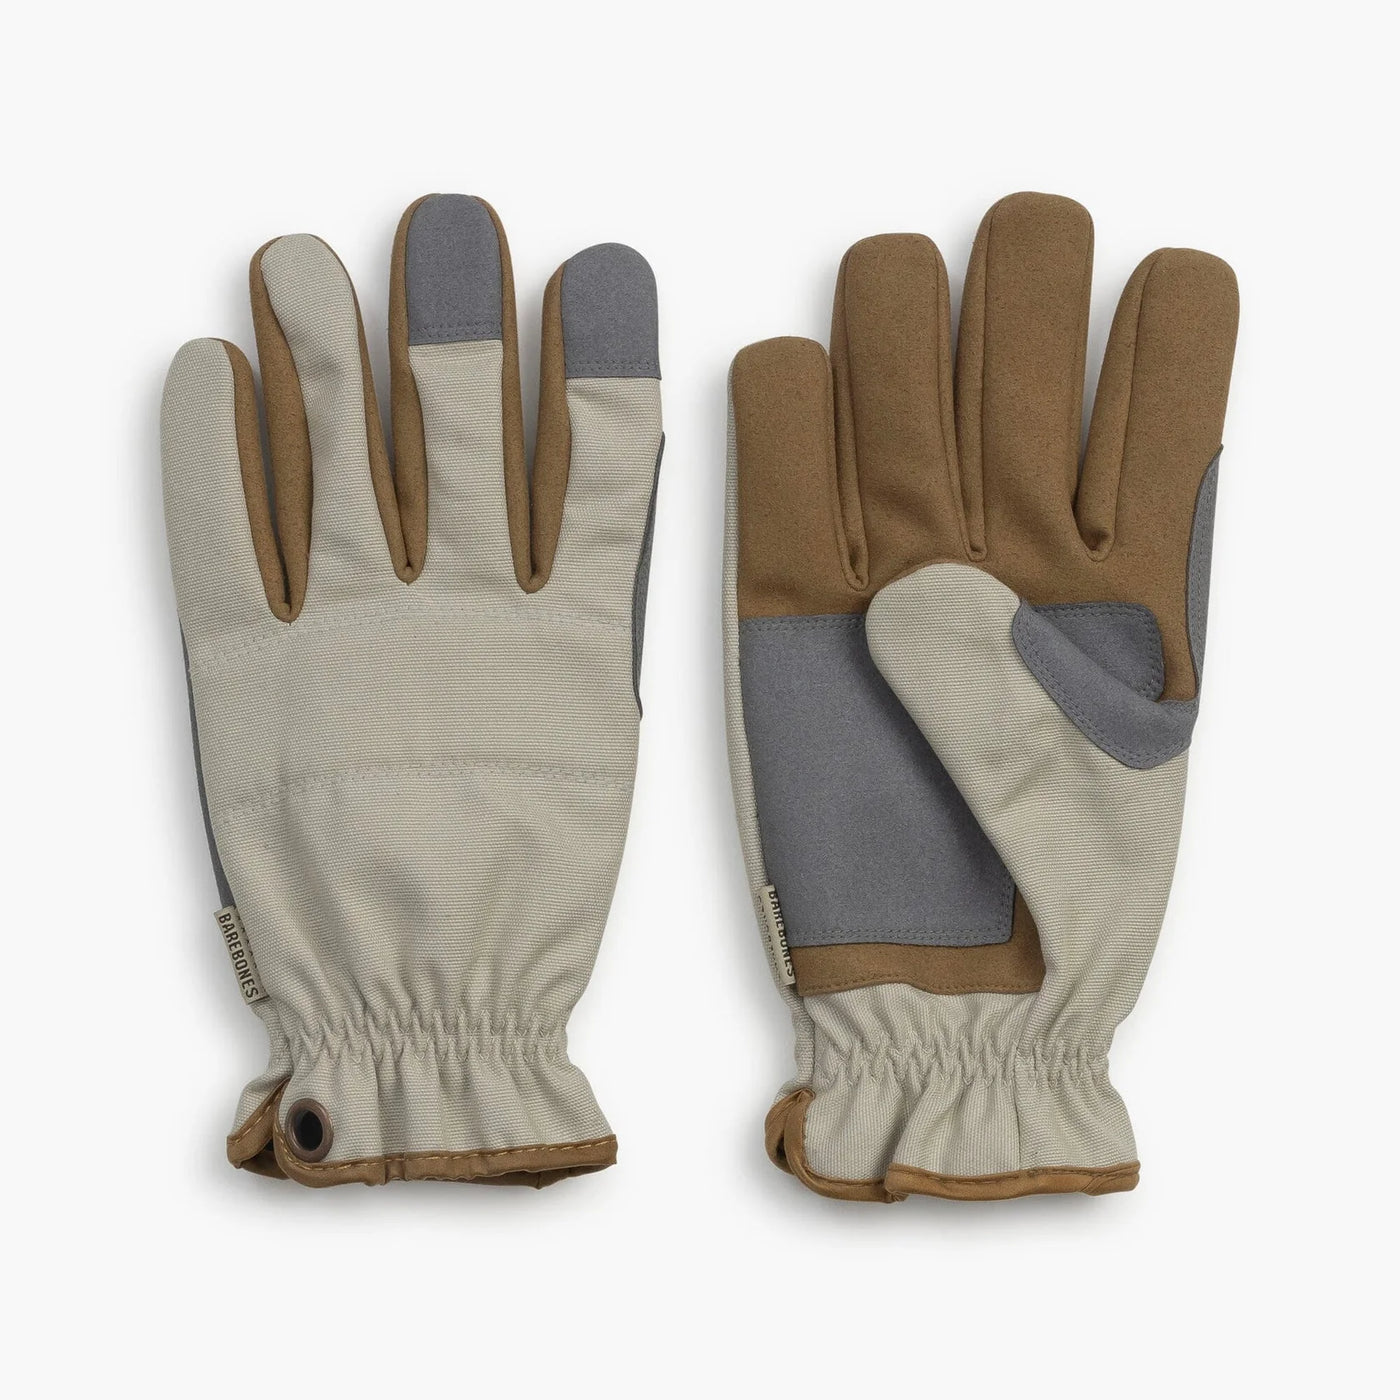 Leepa Garden Gloves